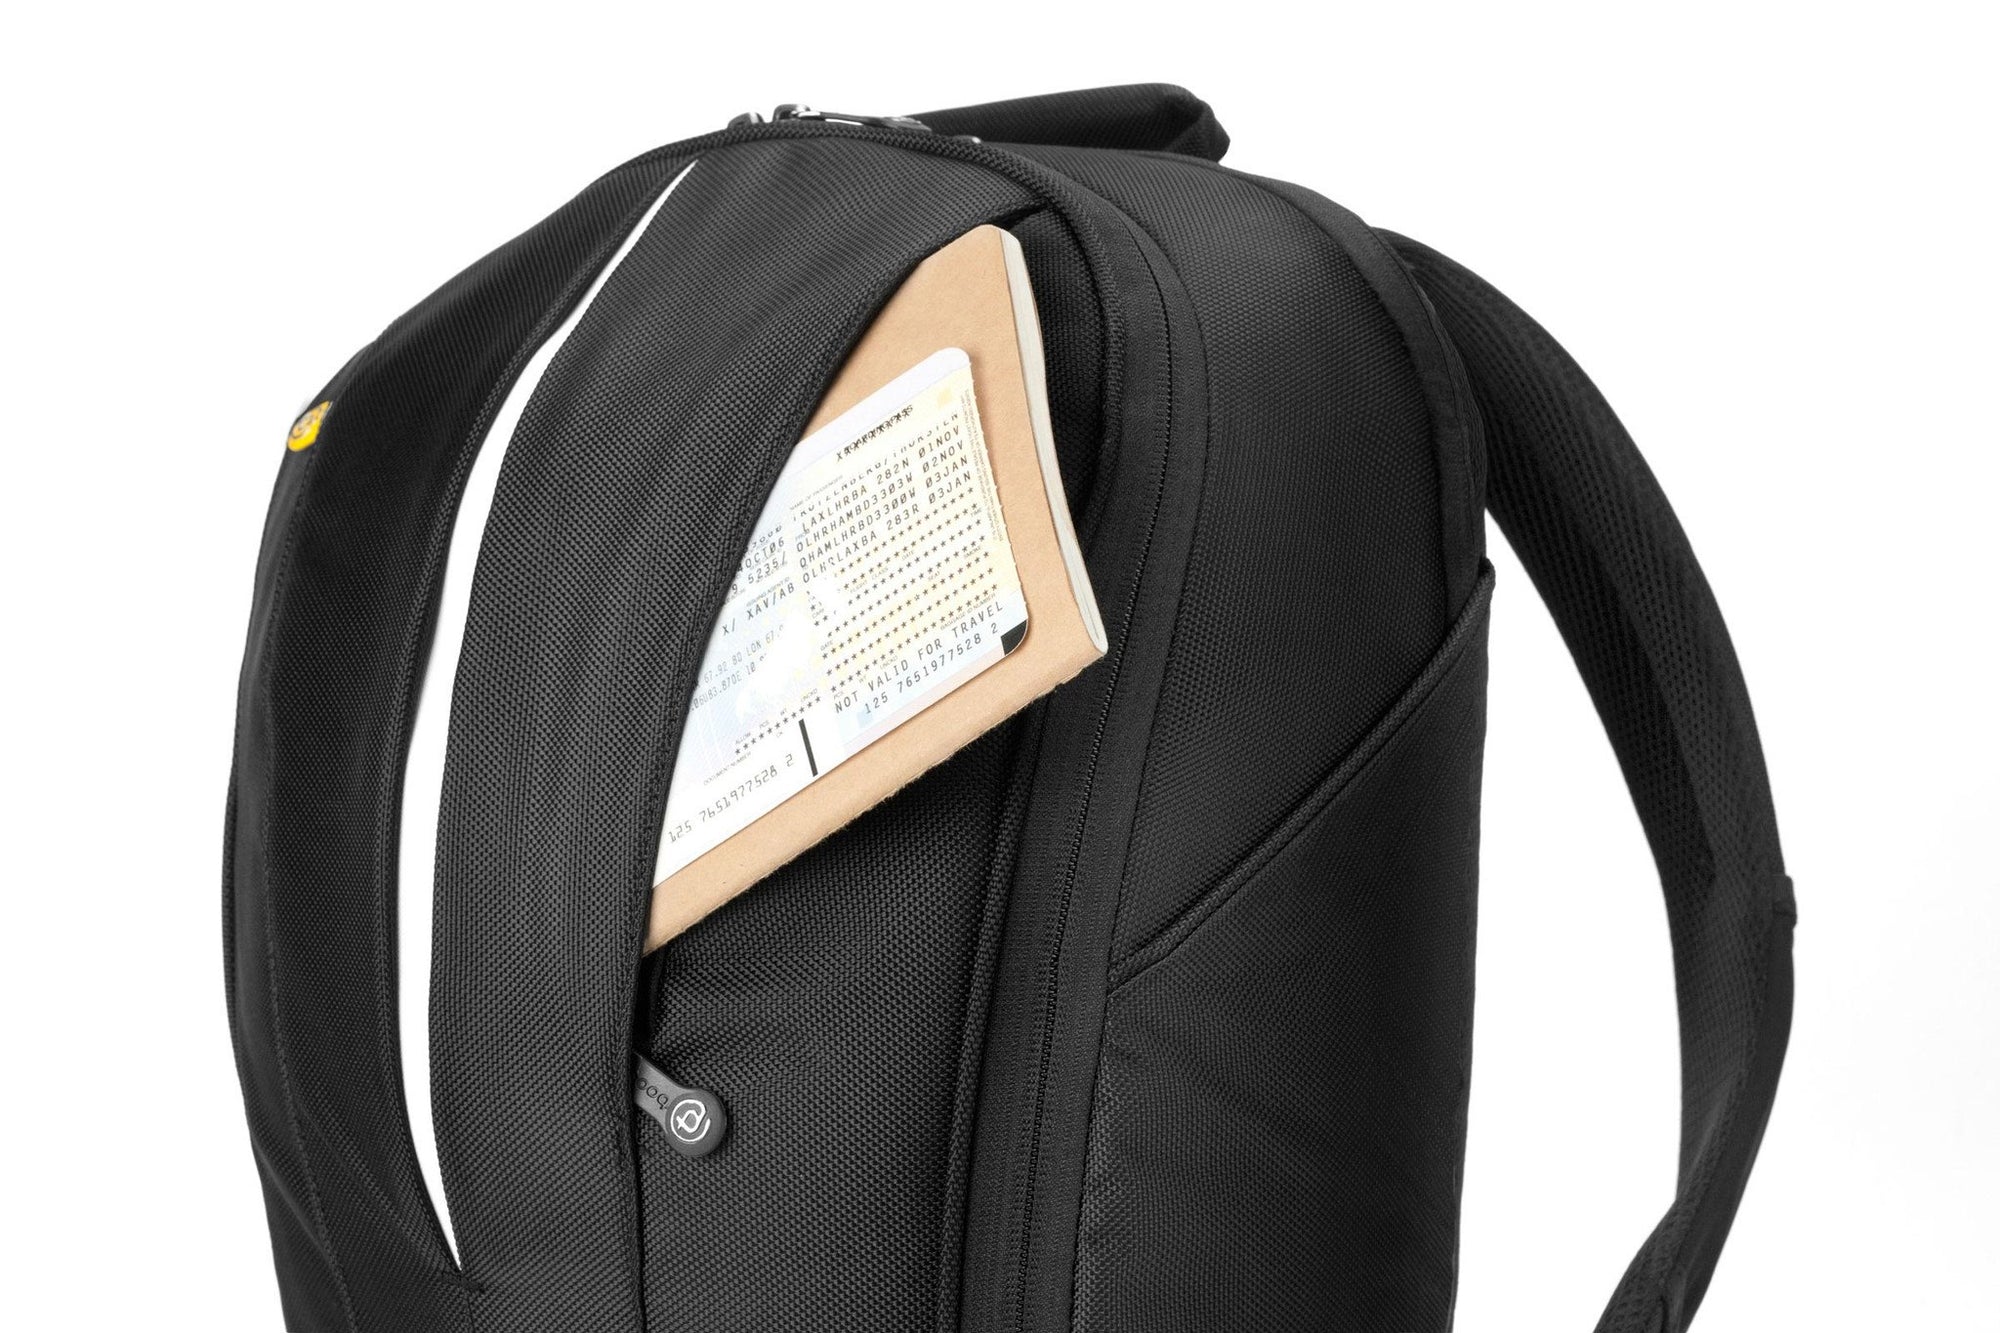 Booq Mamba Shift L Review: Slim and Stylish Notebook Bag